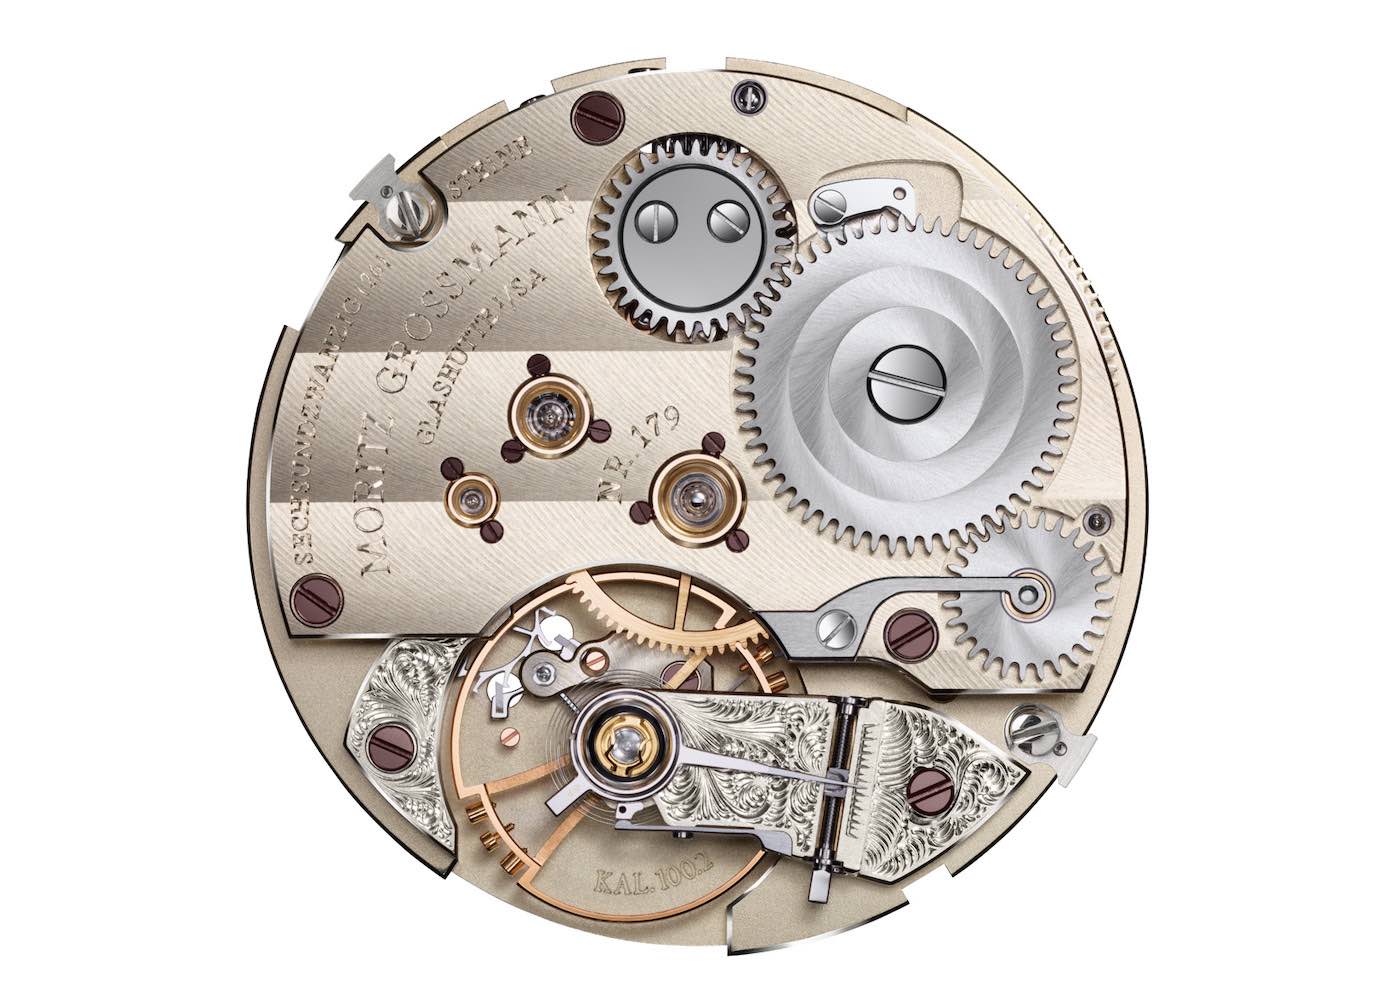 Moritz-Grossmann-Power-Reserve-Vintage-Watch